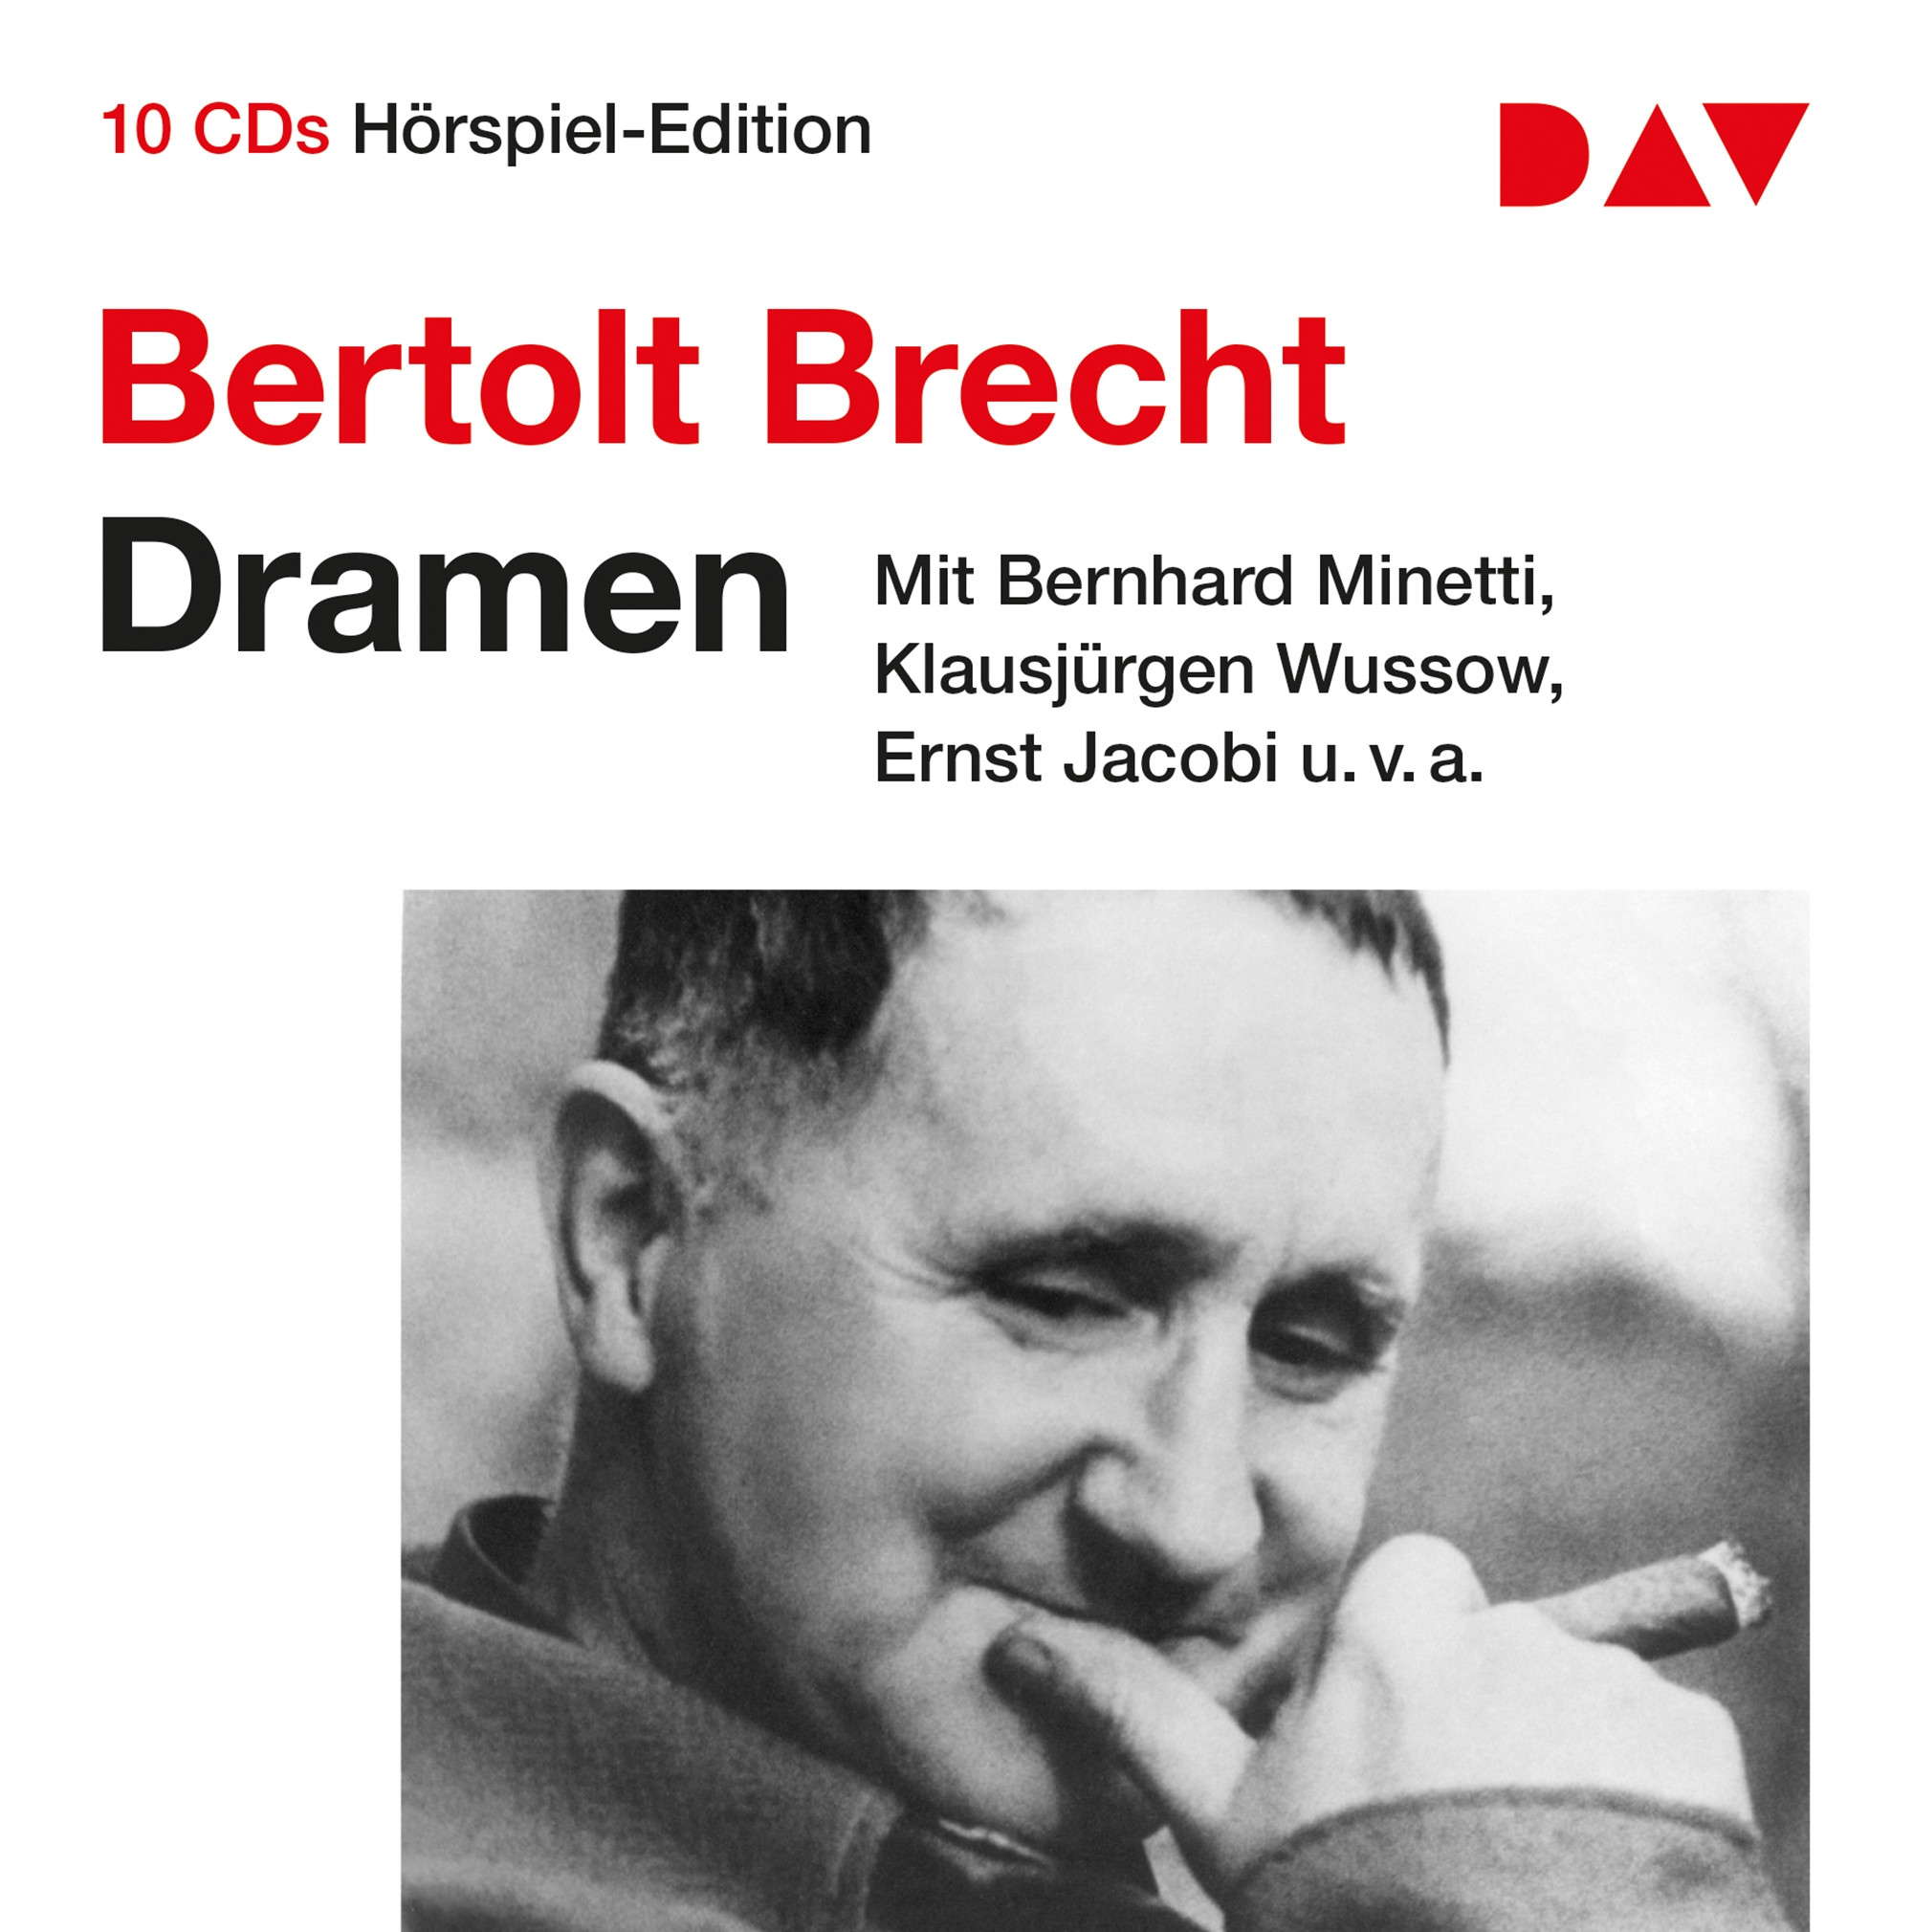 Bertolt Brecht - Dramen: 10 CD Hörspiel-Edition